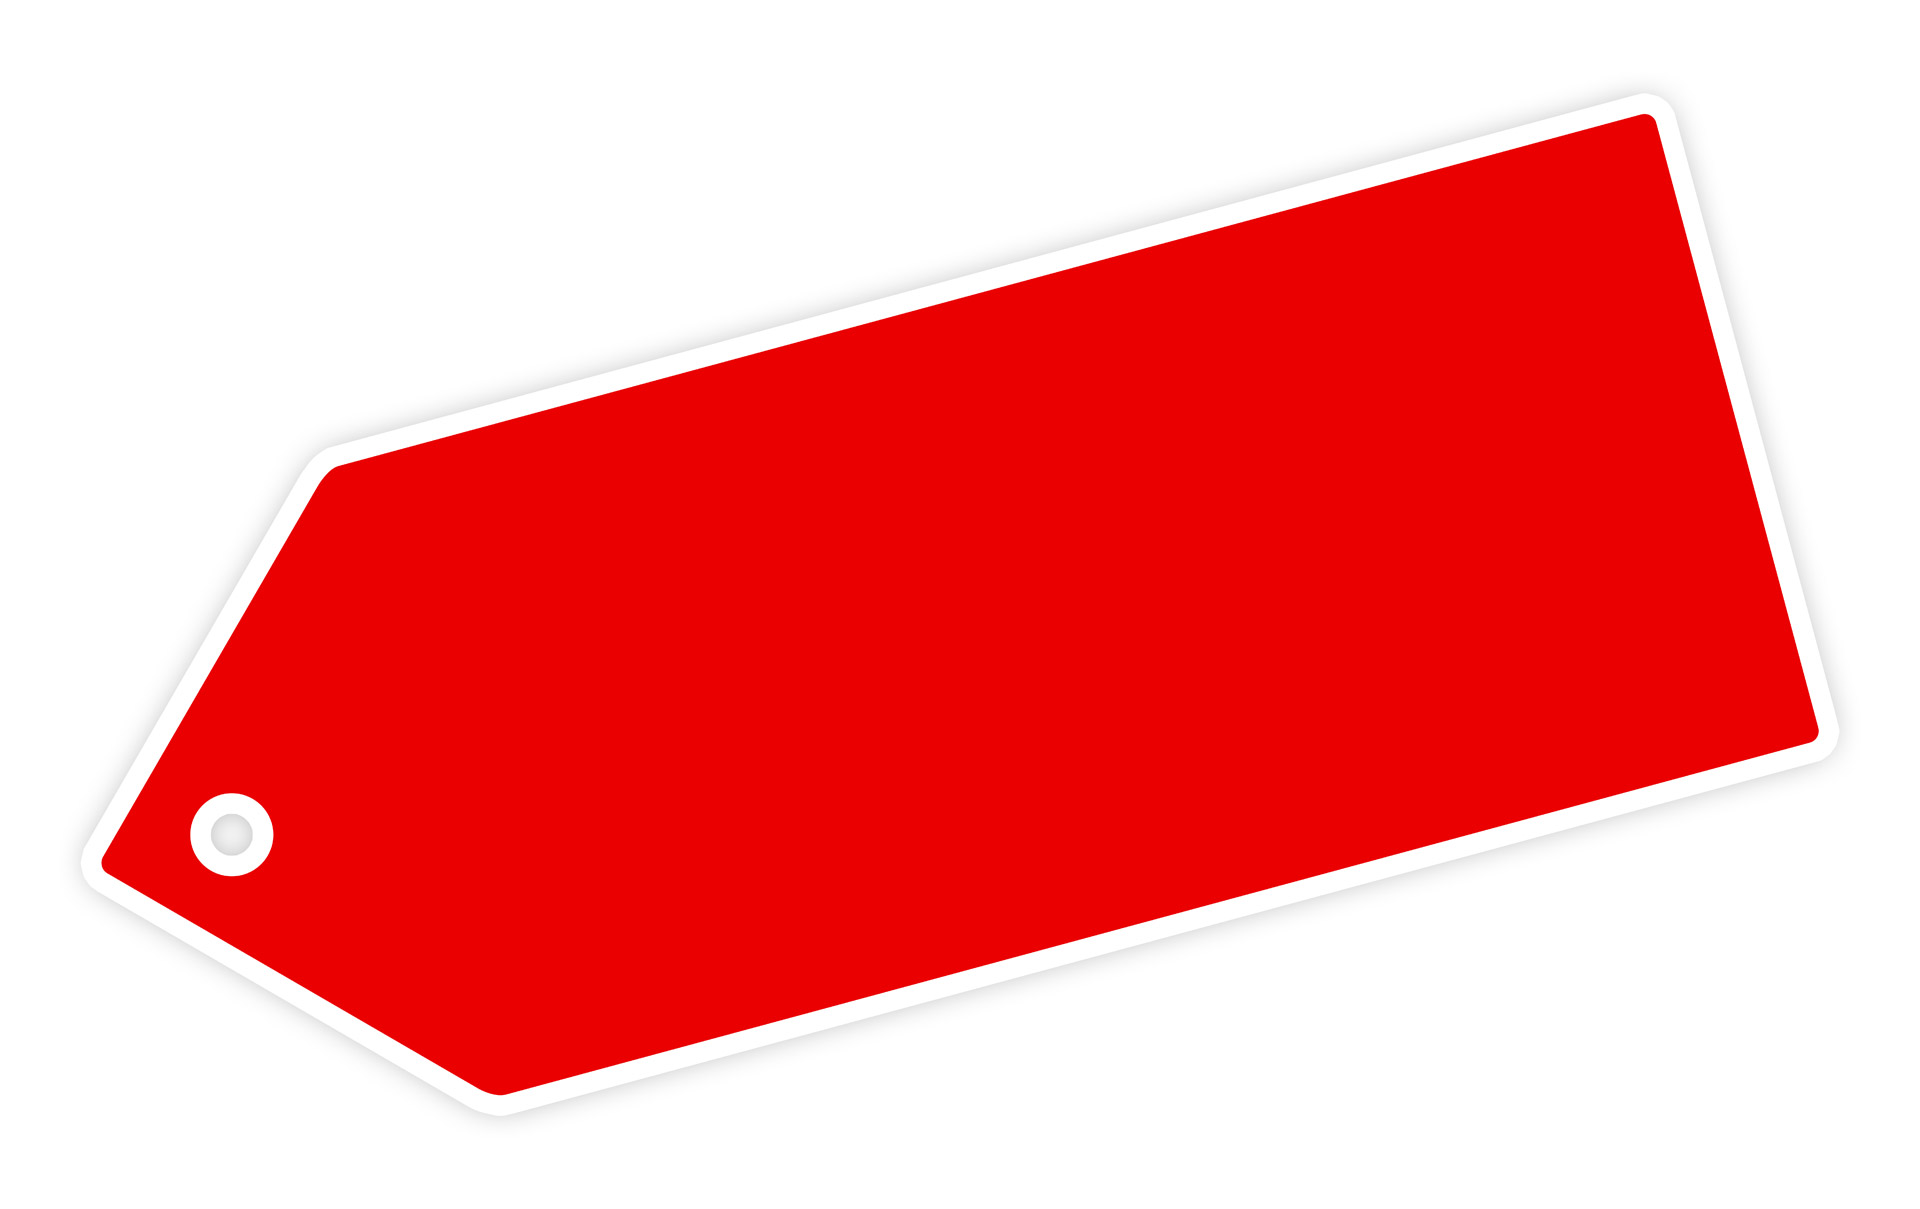 Red label illustration on white background